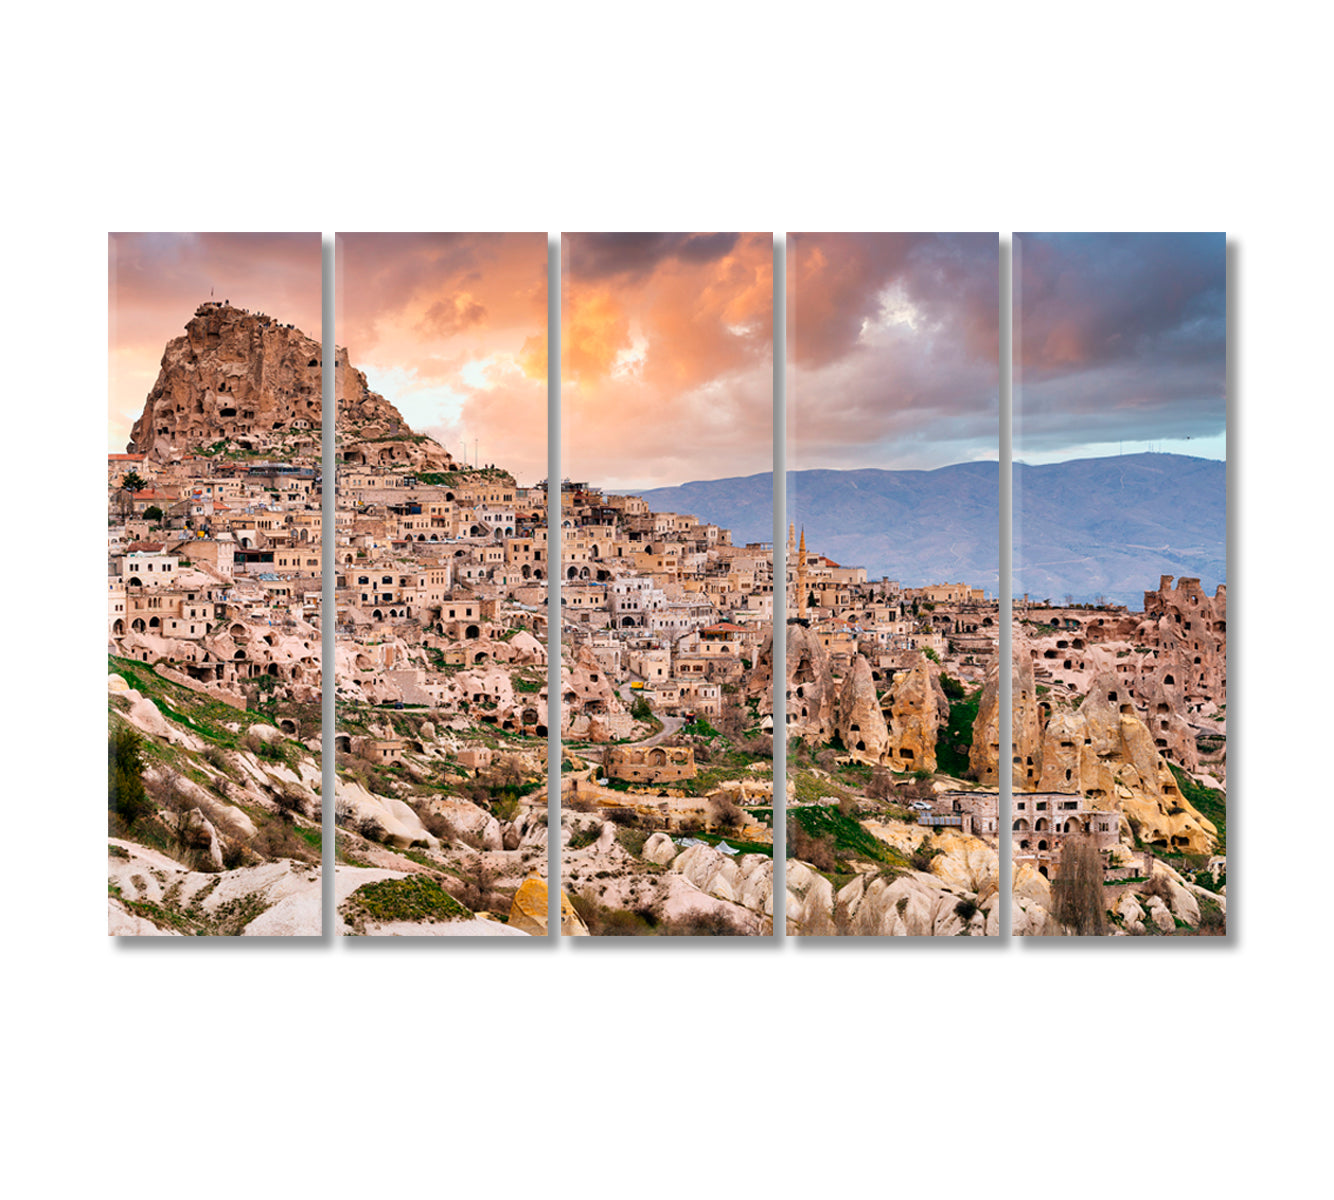 Uchisar Castle and Town Cappadocia Turkey Canvas Print-Canvas Print-CetArt-5 Panels-36x24 inches-CetArt